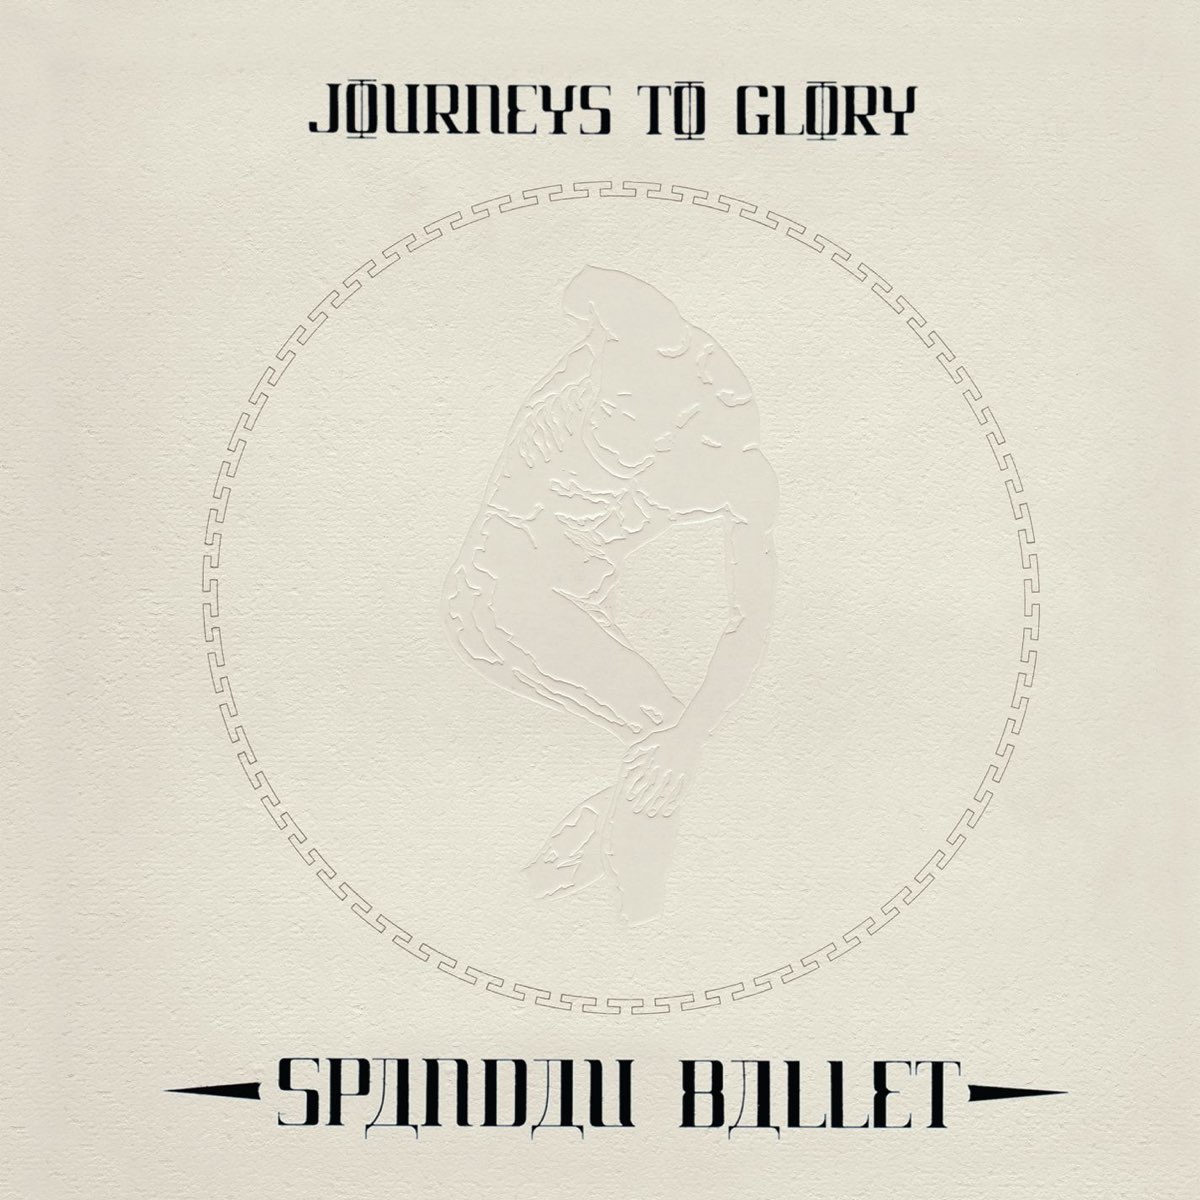 journeys to glory